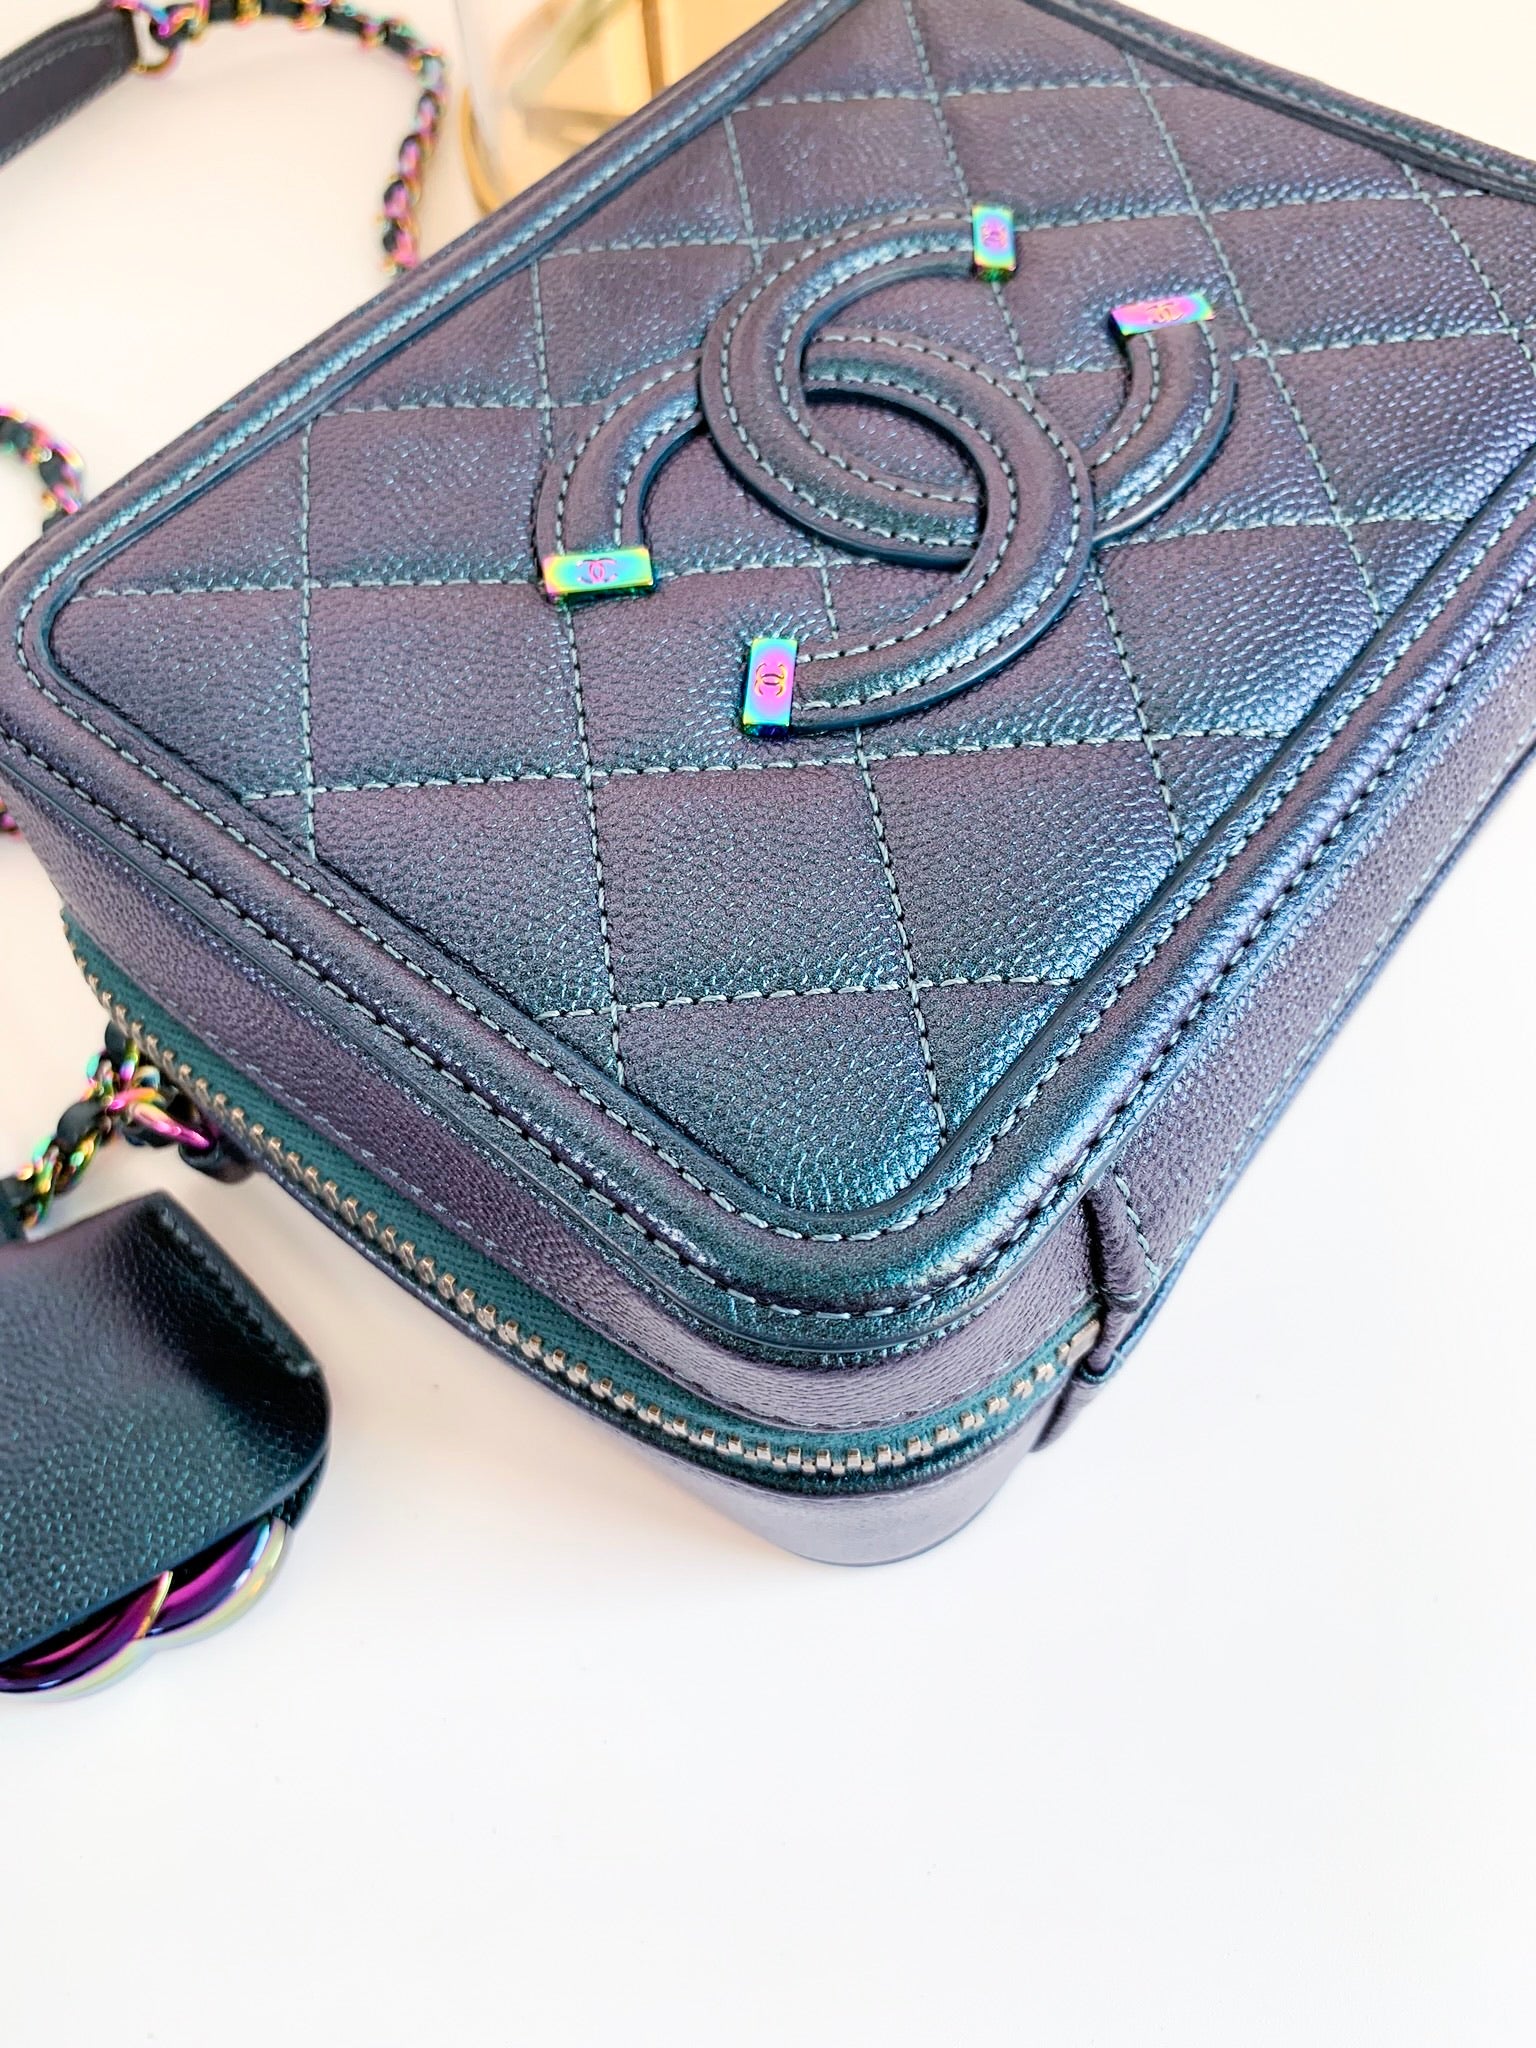 Chanel Quilted Medium CC Filigree Vanity Case Iridescent Dark Turquois –  Coco Approved Studio